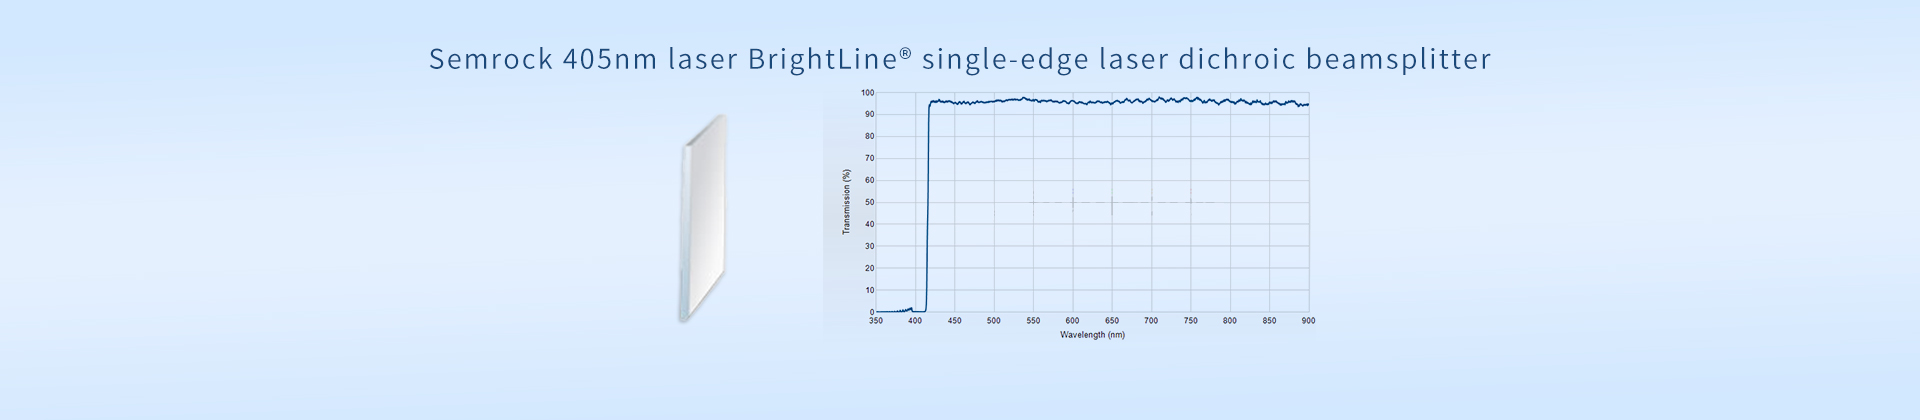 Semrock 405nm laser BrightLine® single-edge laser dichroic beamsplitter